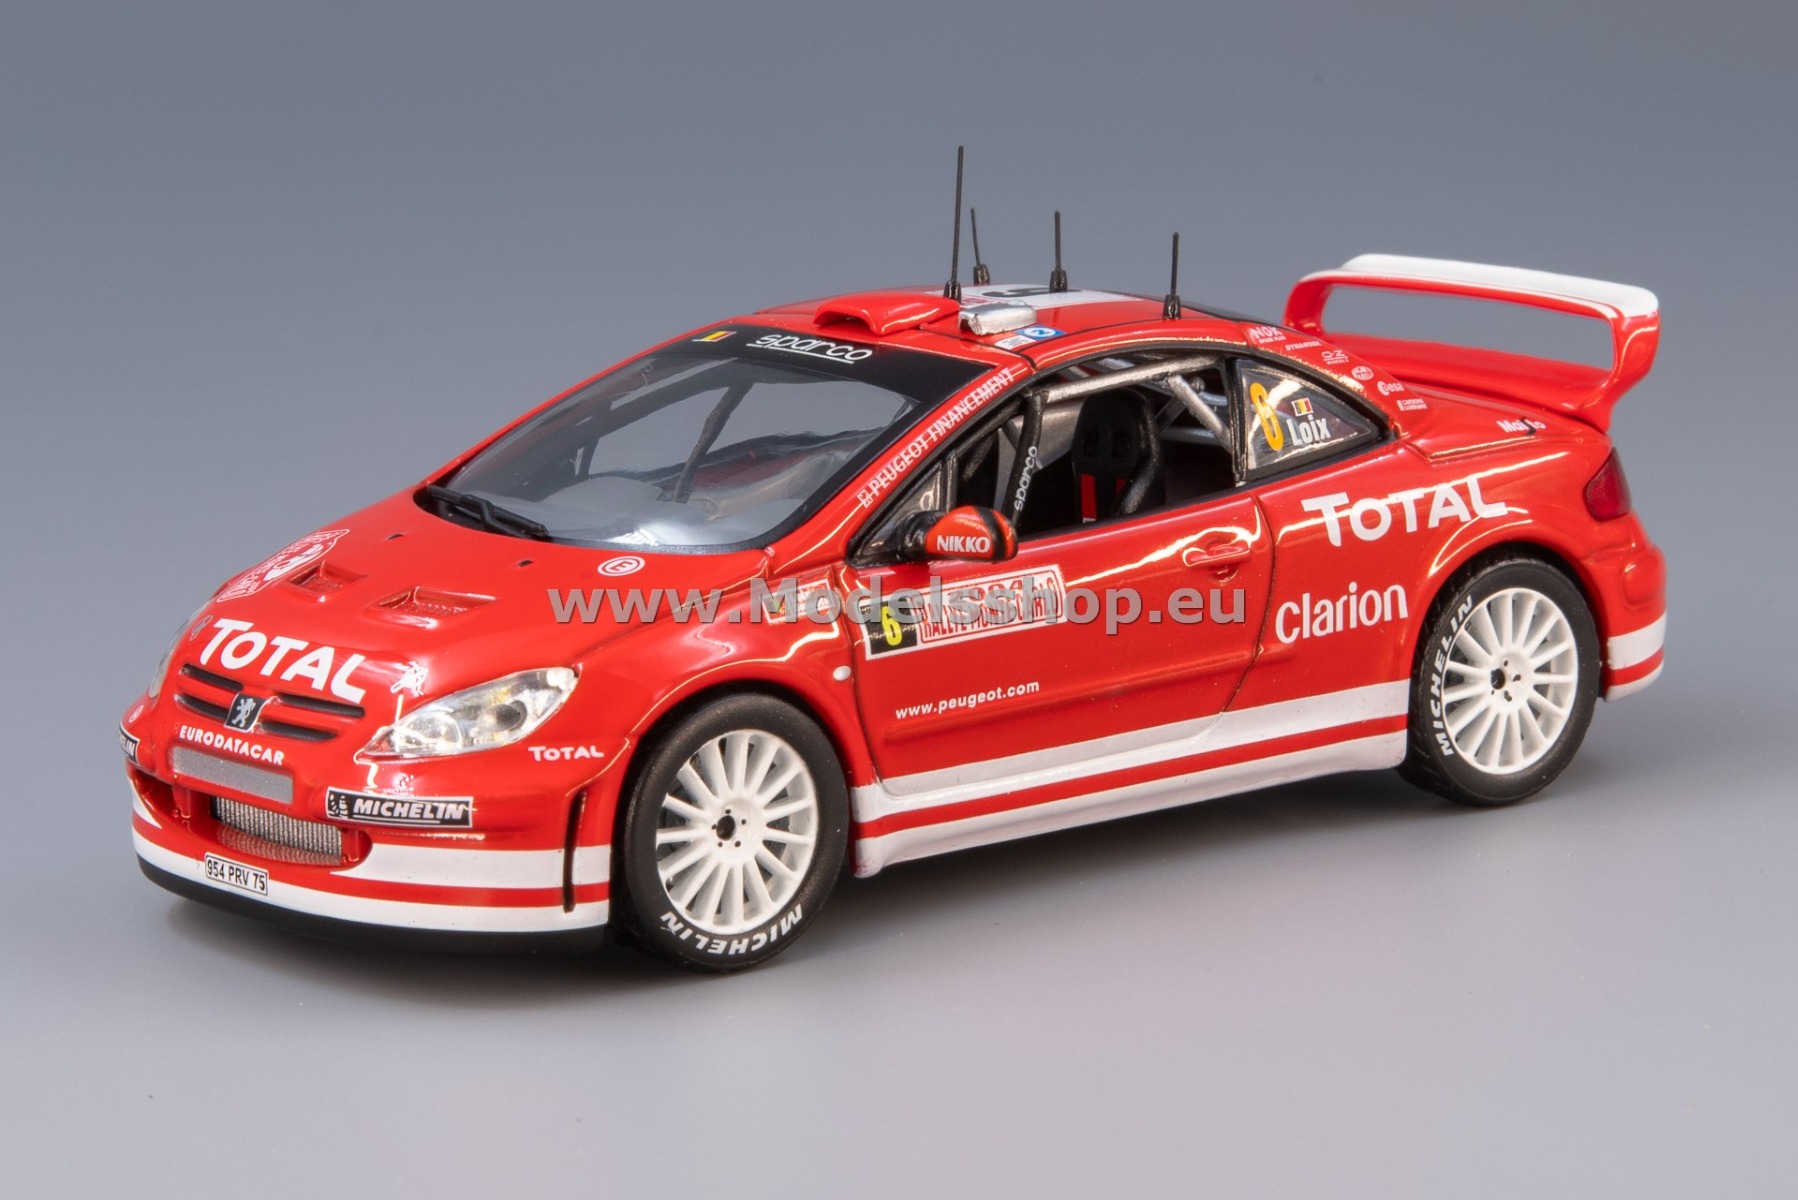 IXO RAM151 Peugeot 307 WRC No.6, Rallye Monte Carlo 2004 (no headlights version), F.Loix - S.Smeets